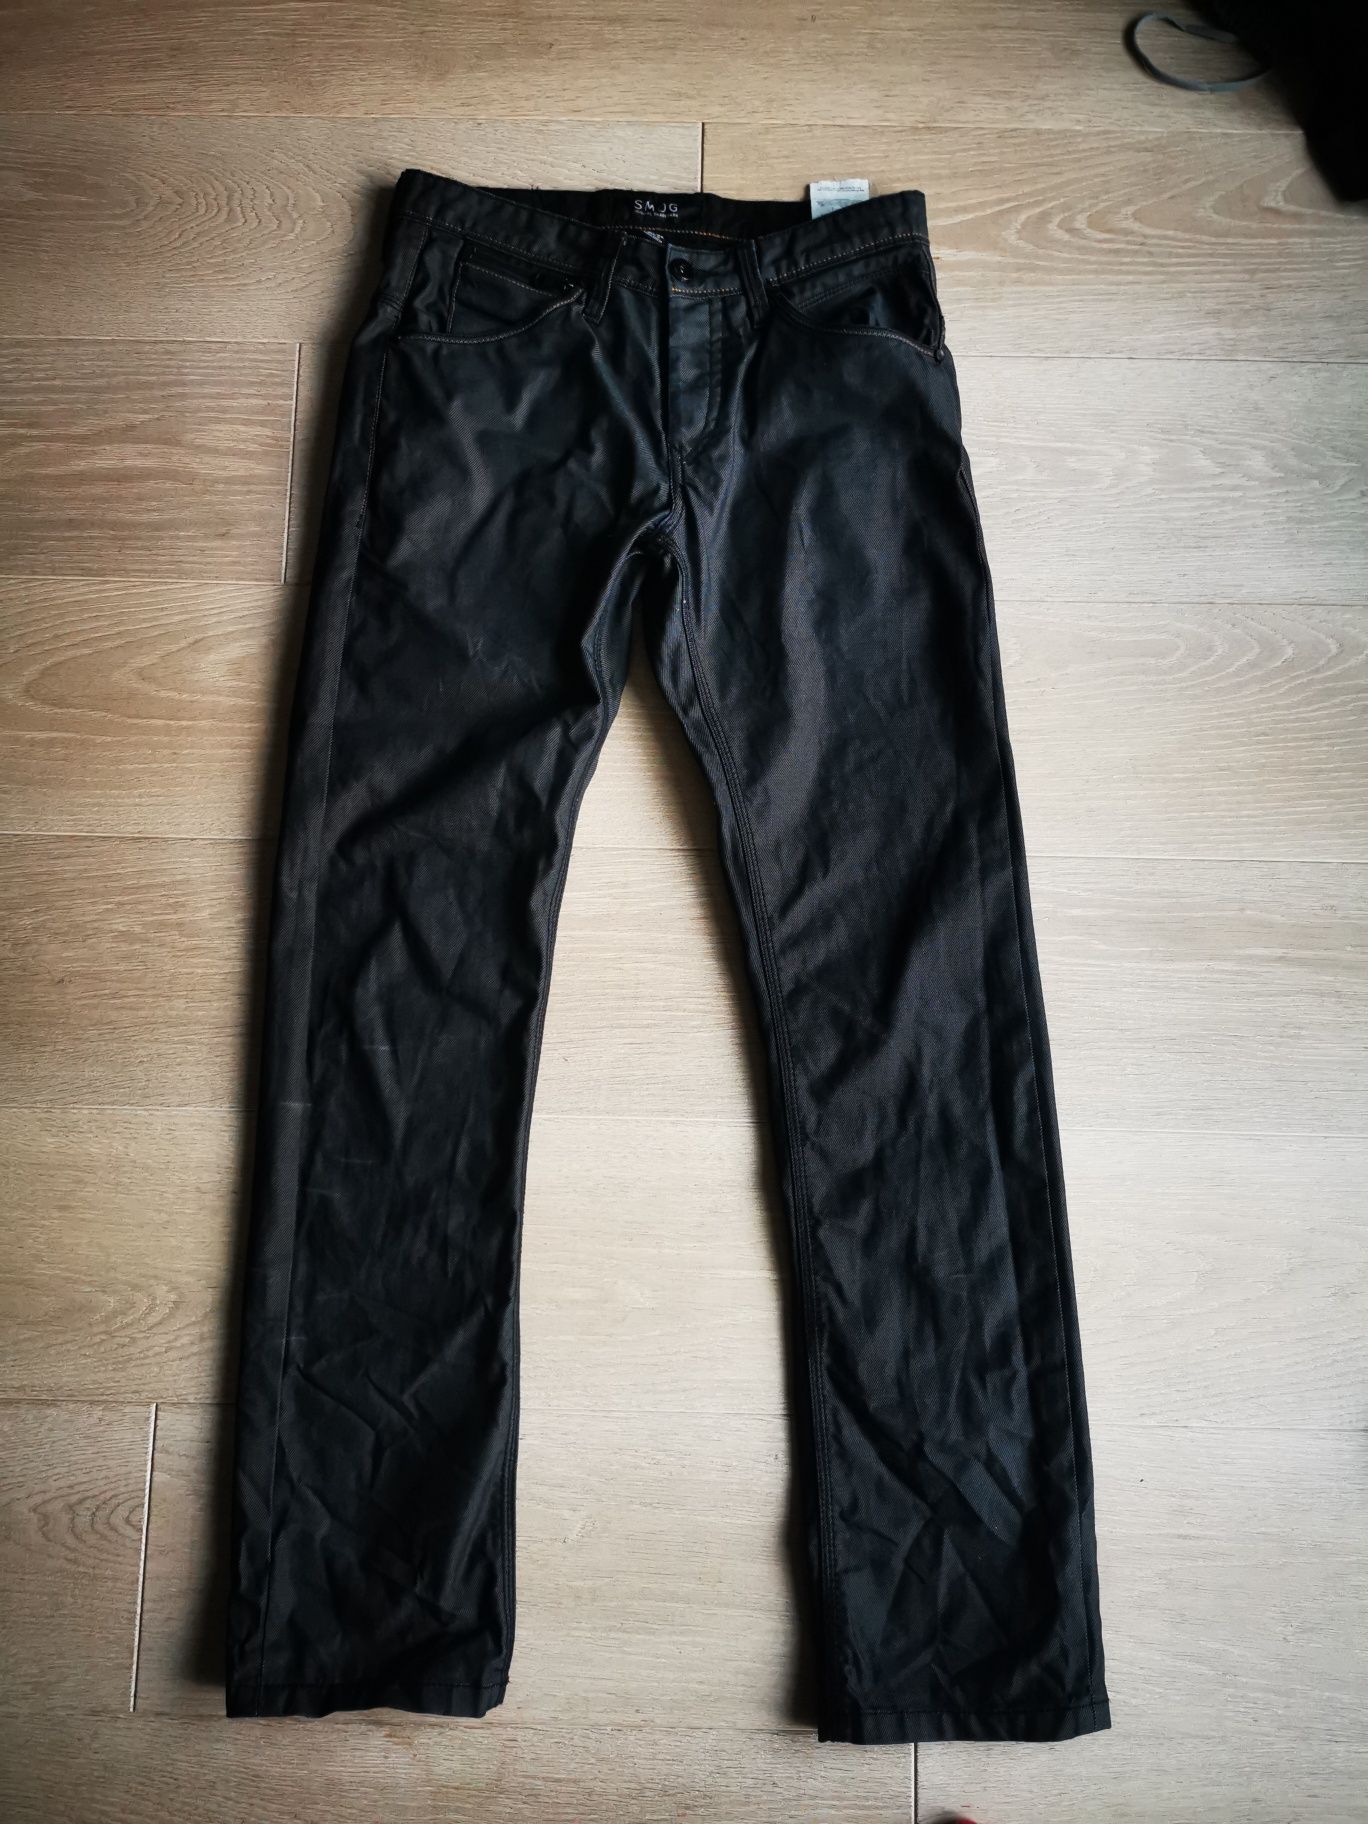 Spodnie męskie New Yorker Smoggrafitowe czarne 30/32